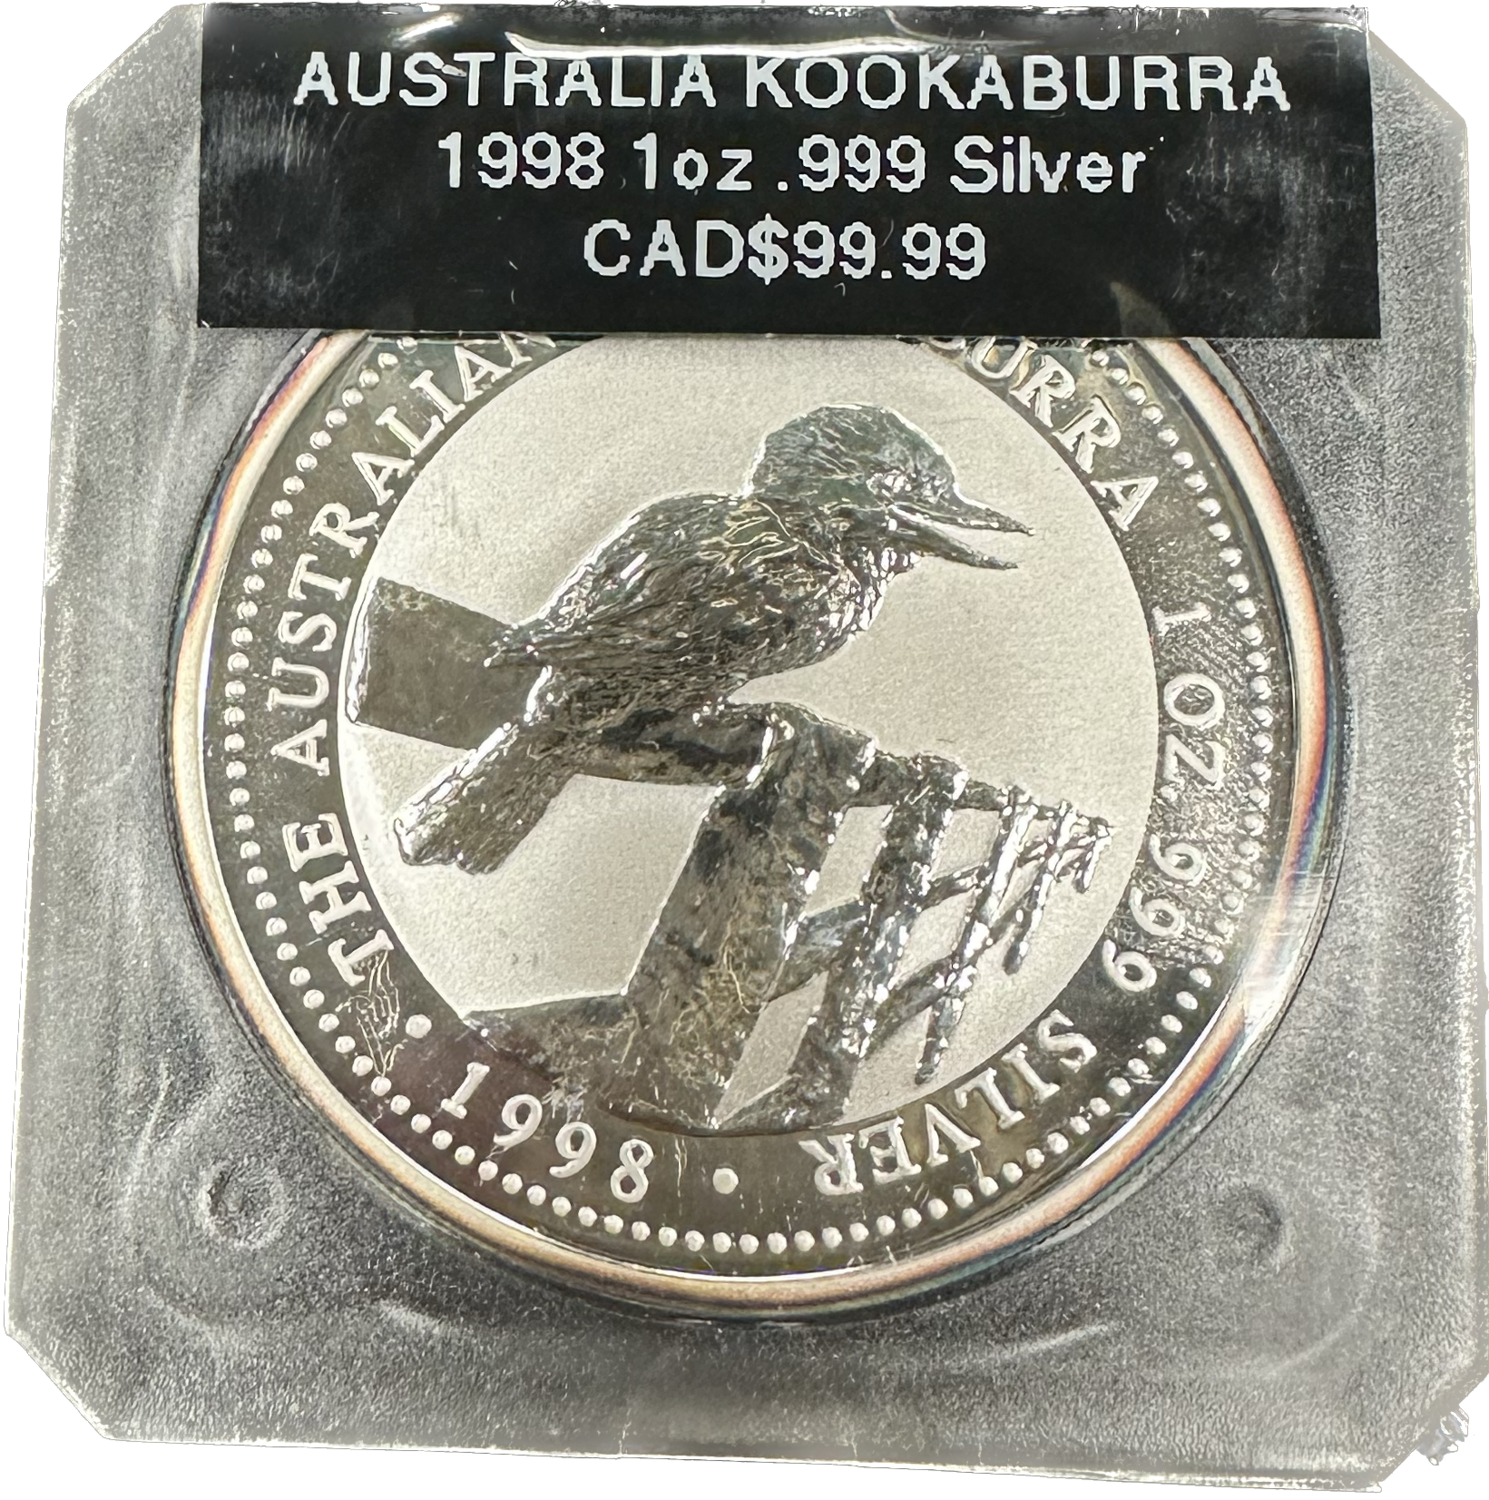 Australia Kookaburra 1 Dollar 1oz .999 Silver 1998 Silver Coin